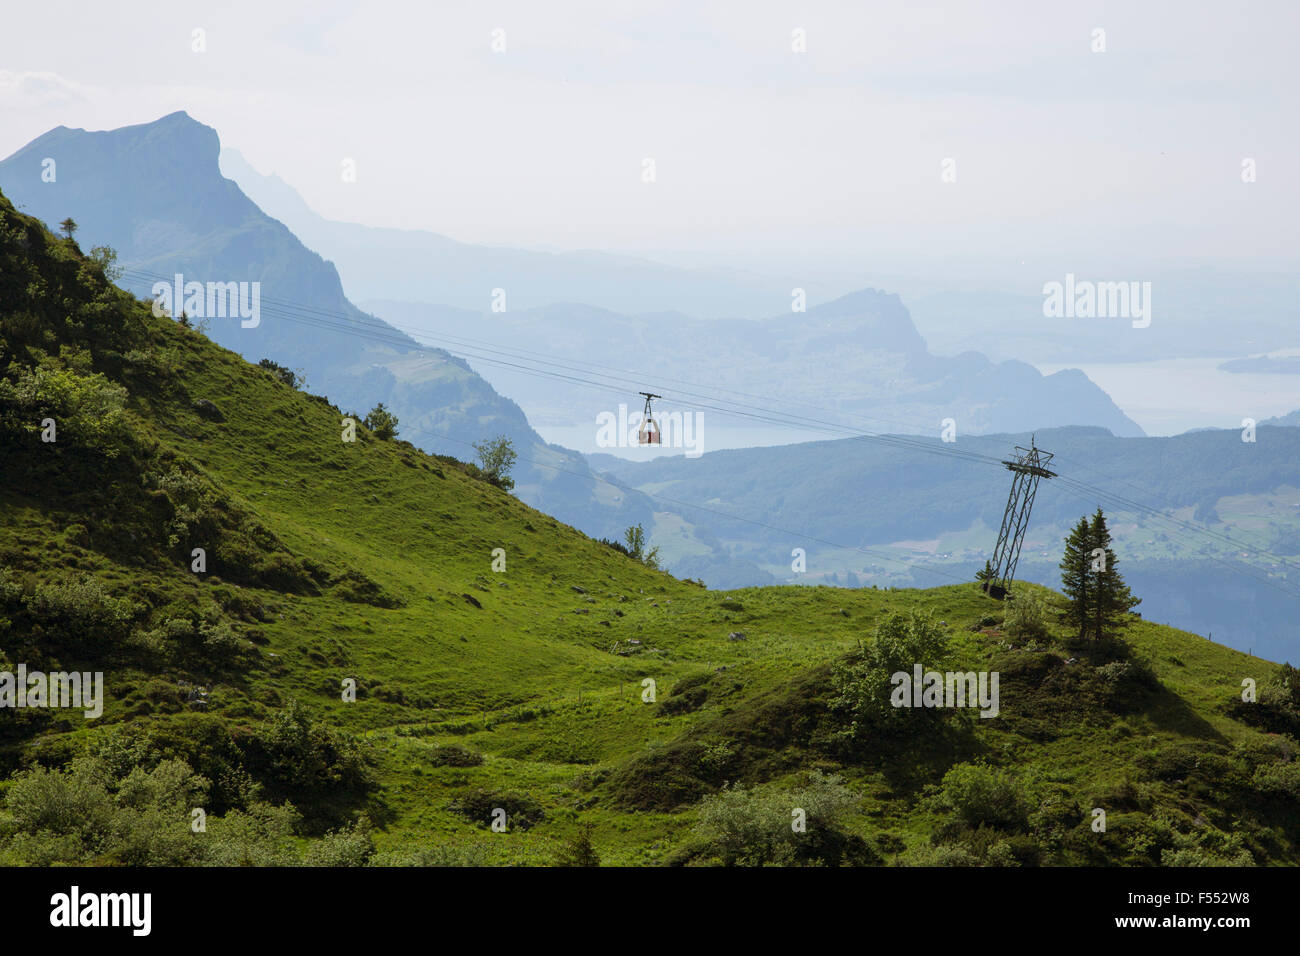 Idyllic view of Swiss Alps in foggy weather Stock Photo